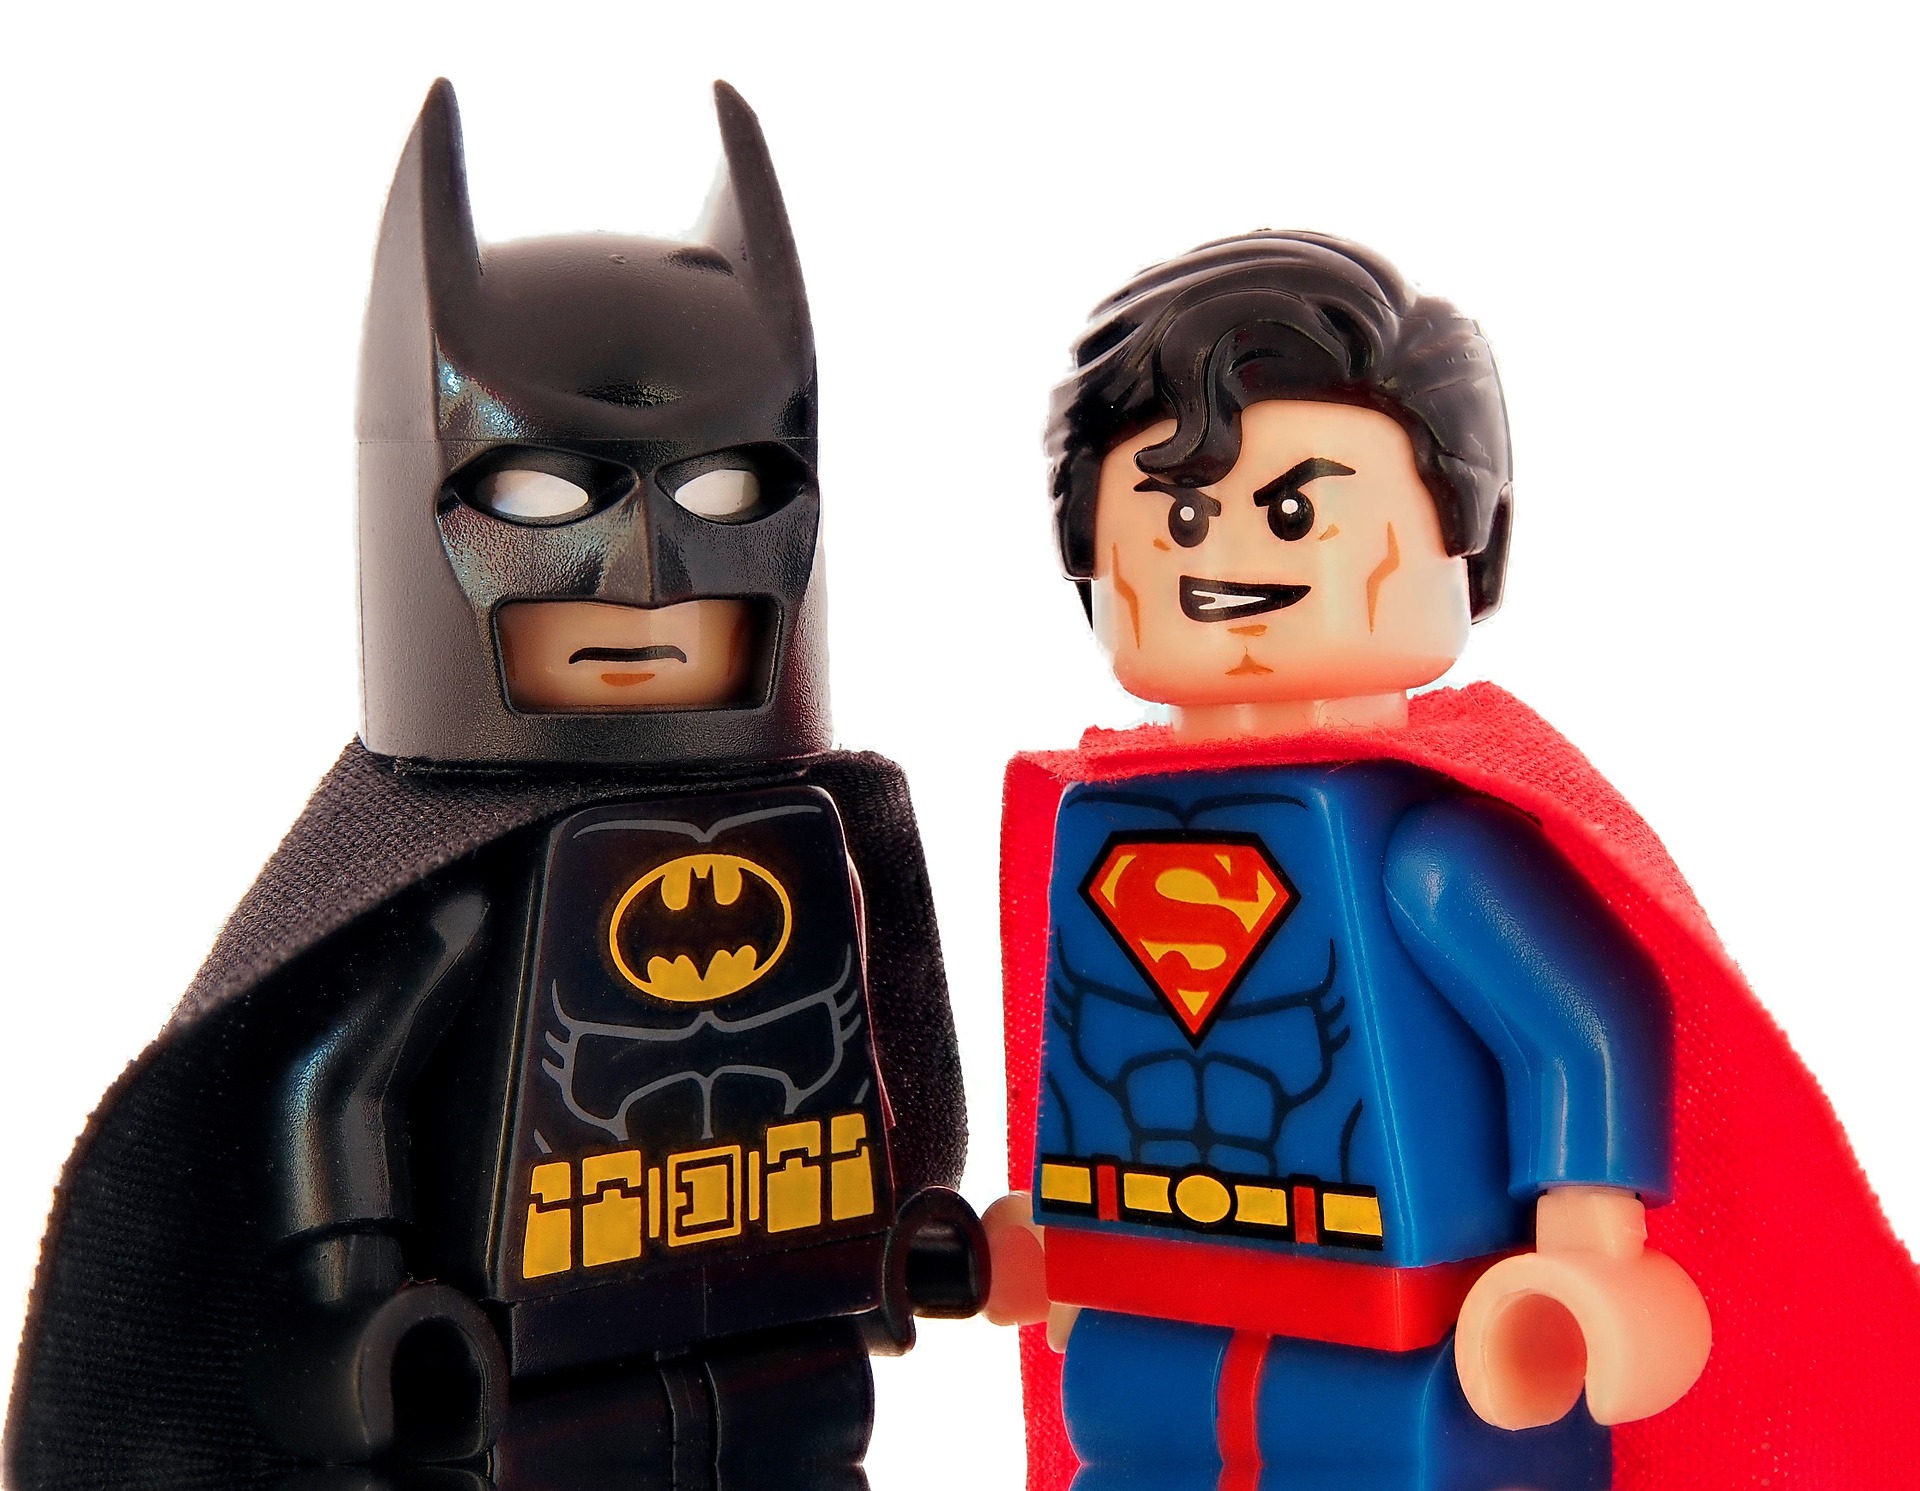 LEGO Batman and Superman looking grim.